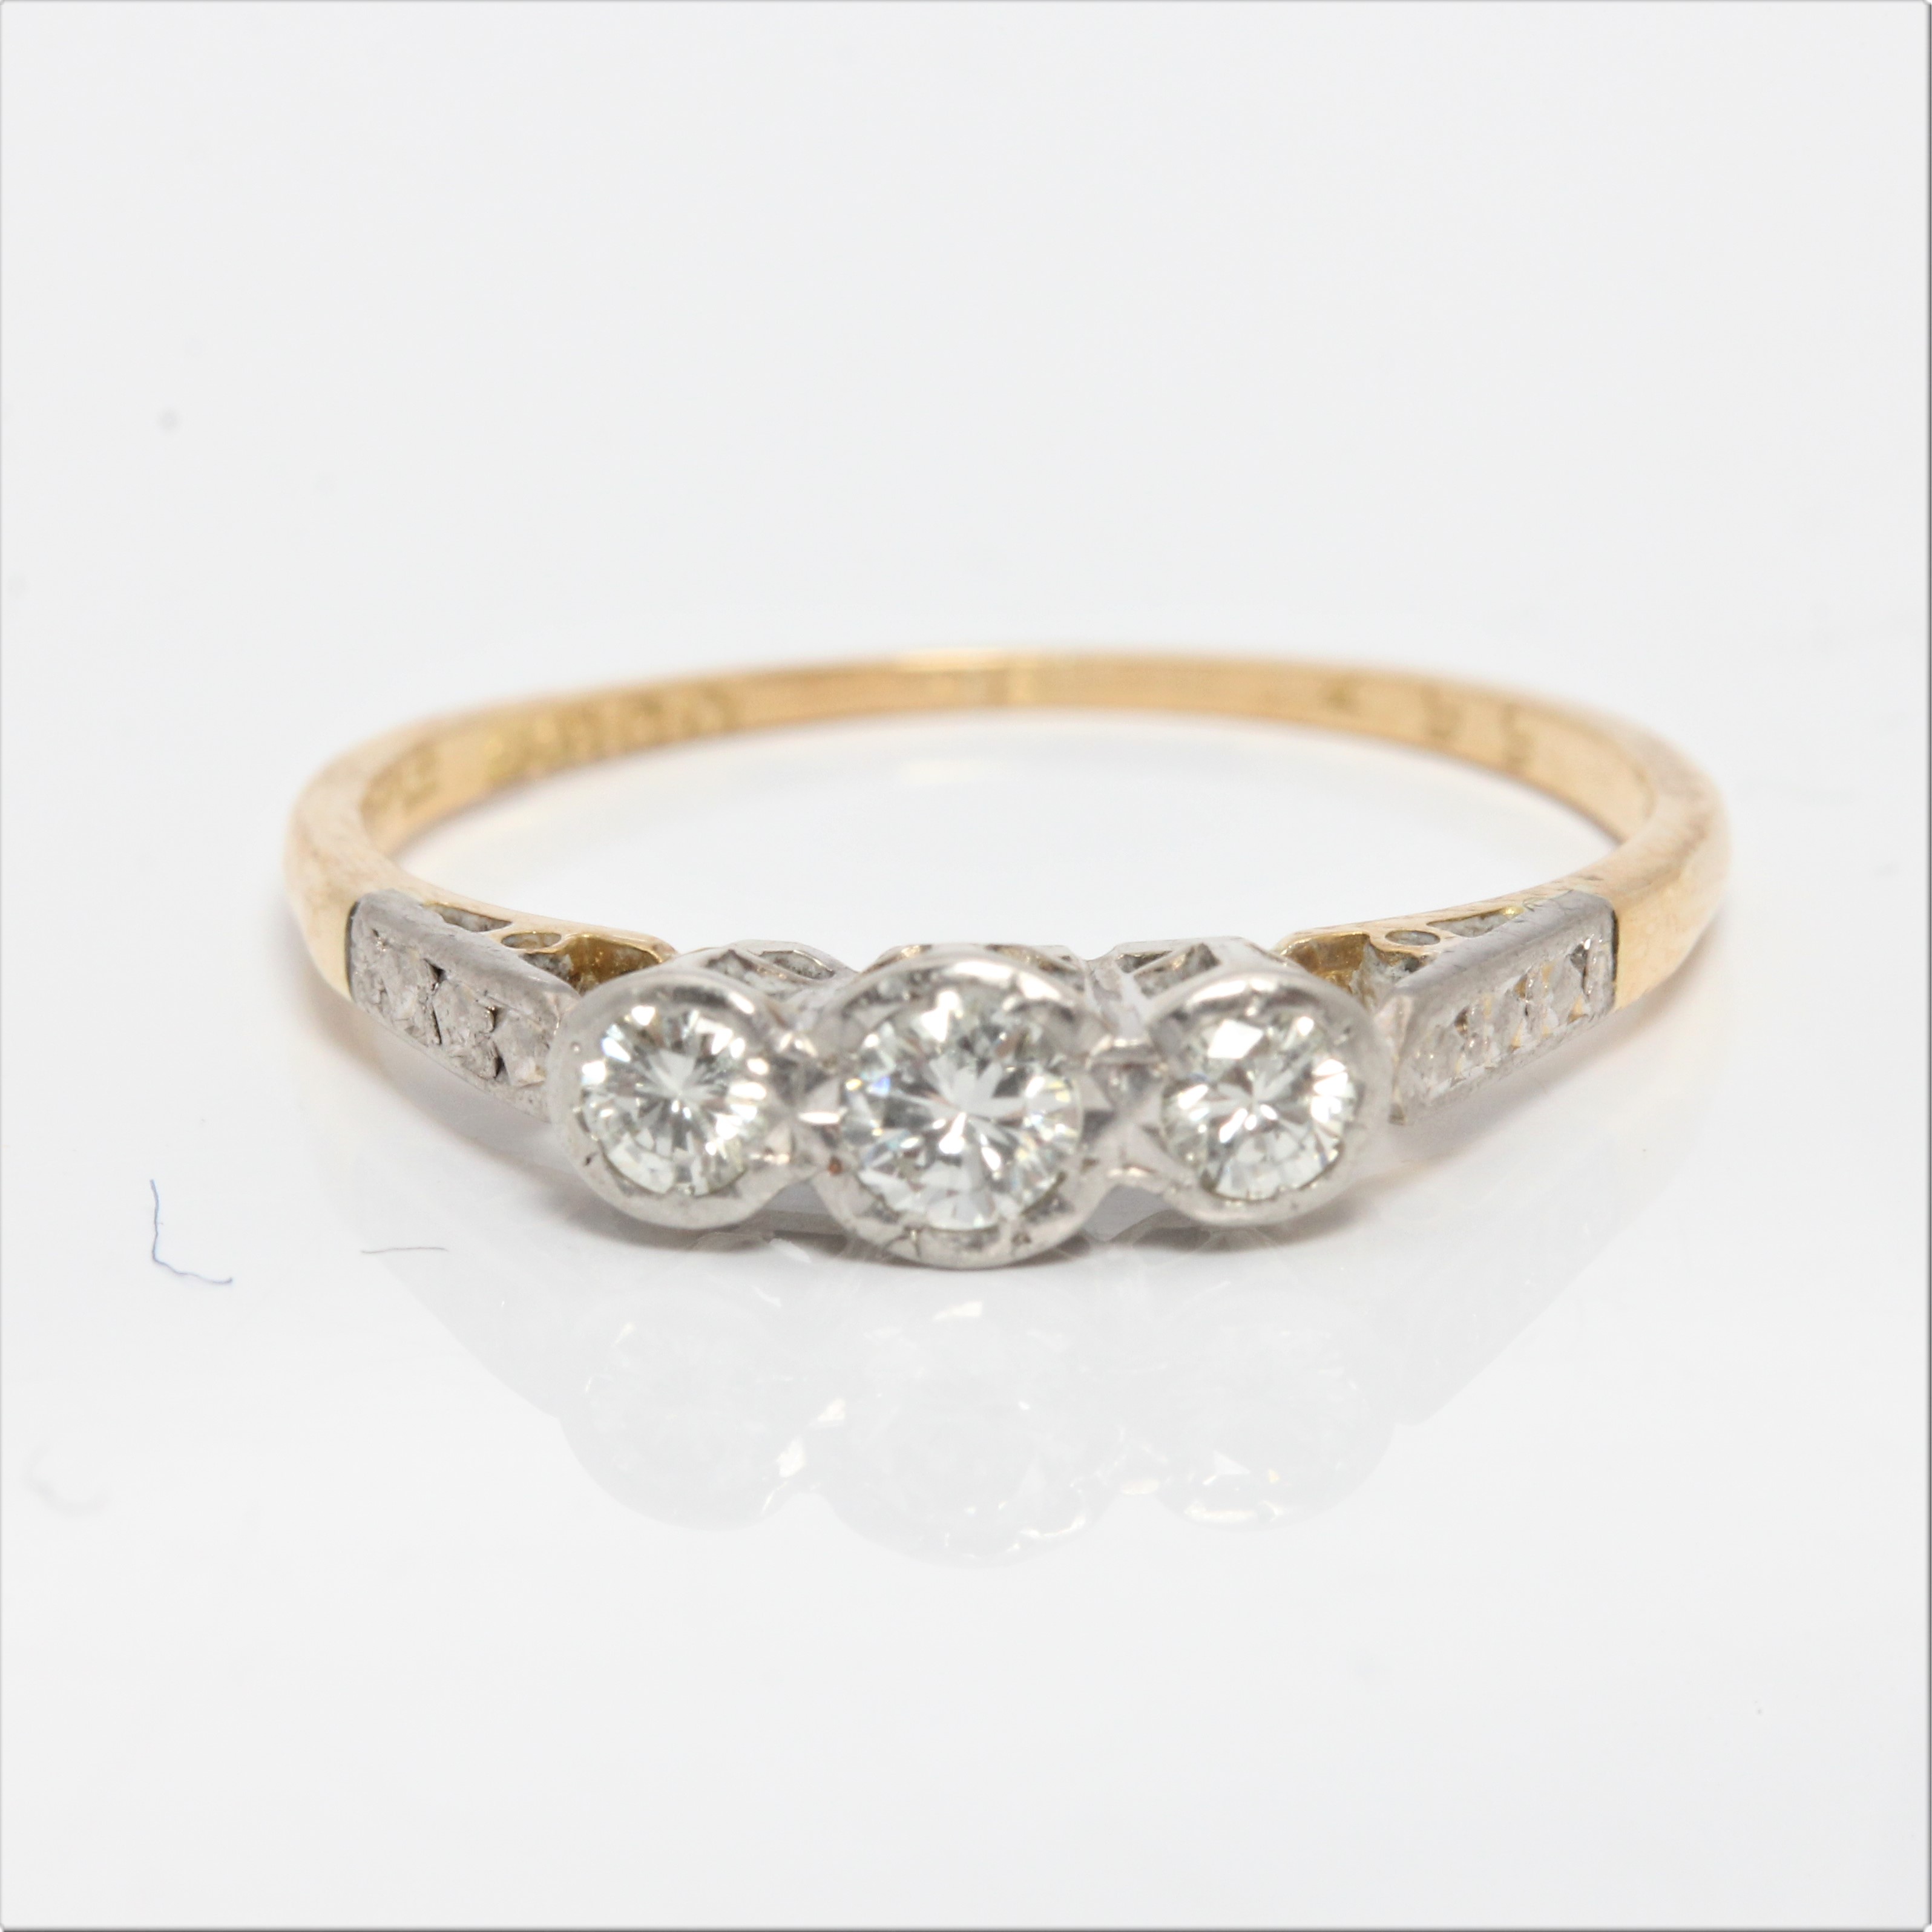 A hallmarked 18ct yellow gold three stone diamond ring, set with three graduated round brilliant cut